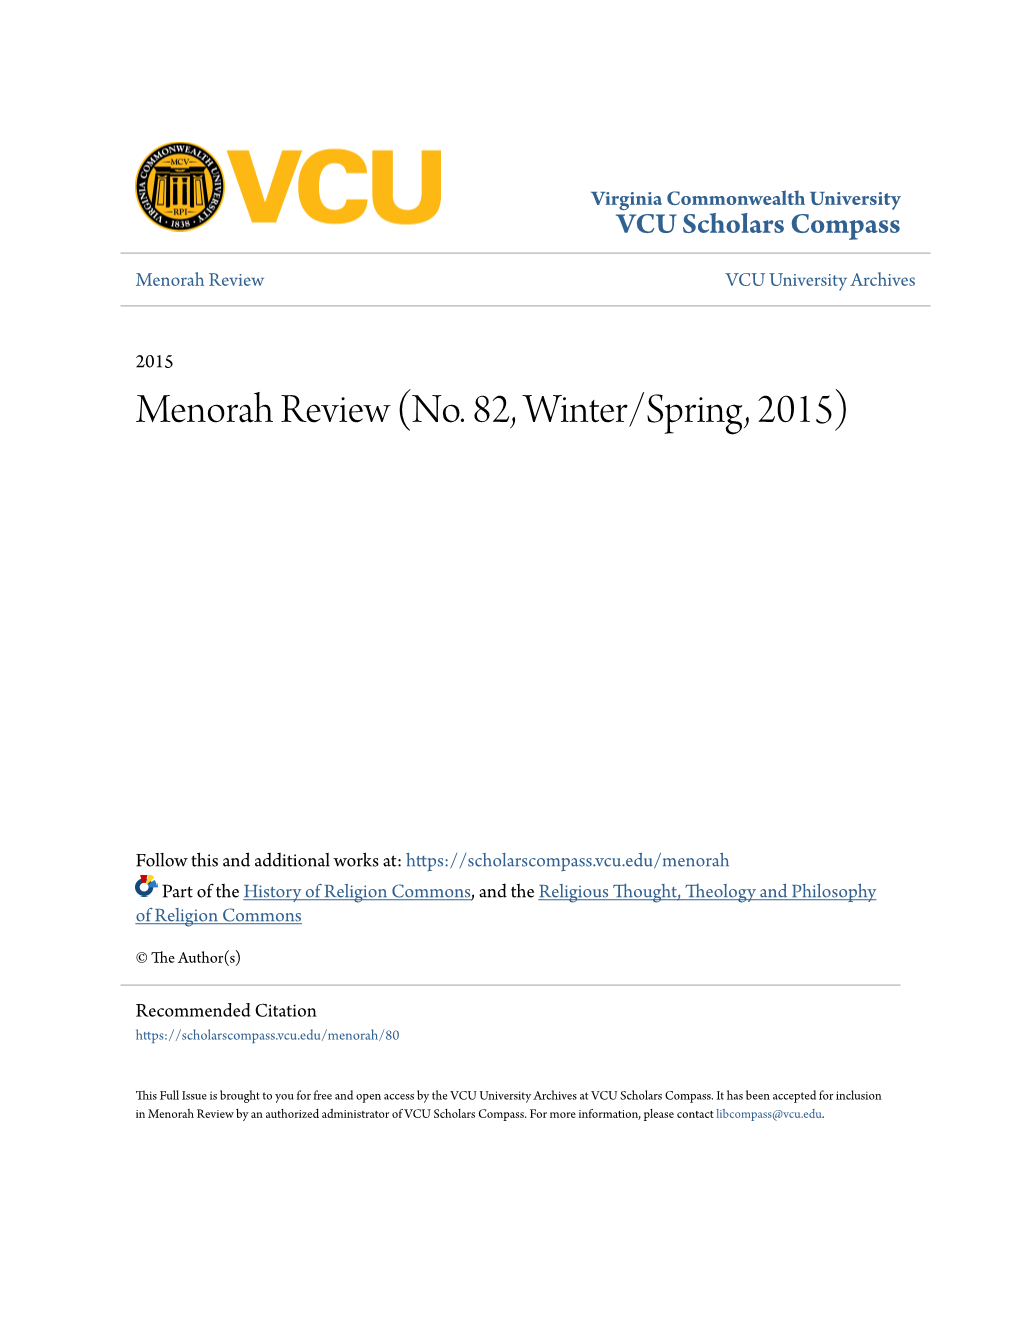 Menorah Review (No. 82, Winter/Spring, 2015)